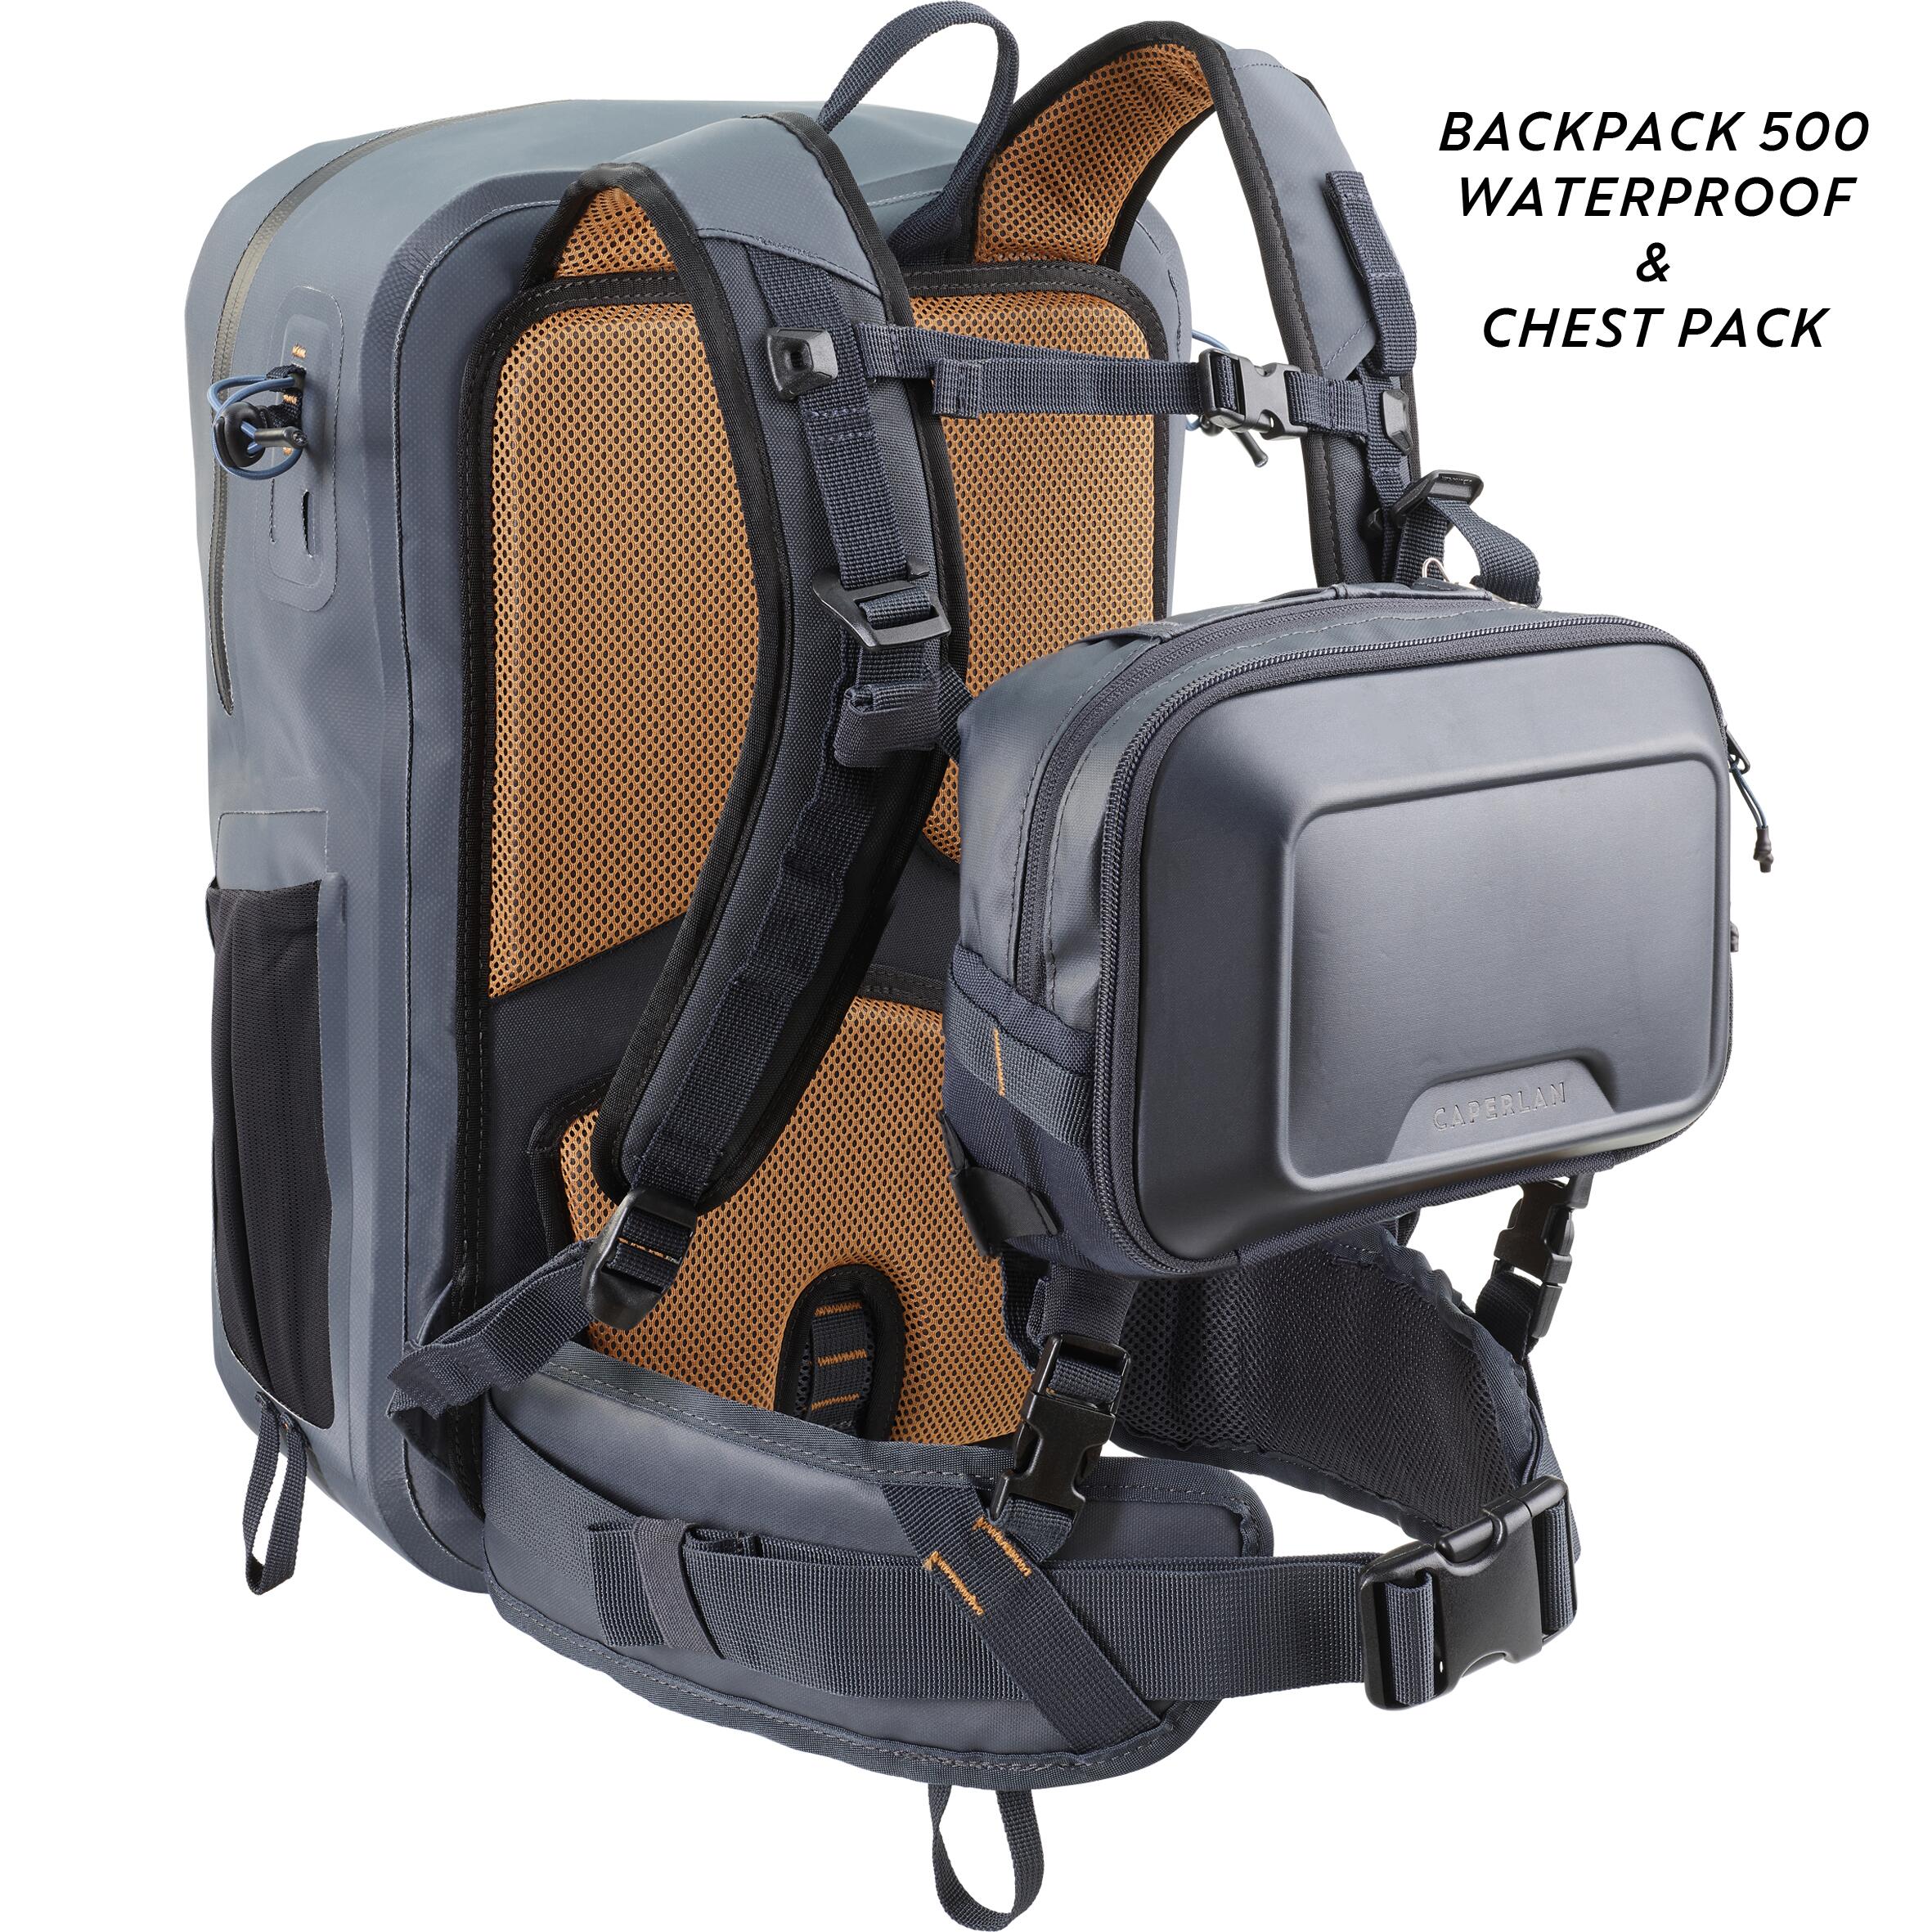 Fishing waterproof backpack 500 WPF 20 L 7/10